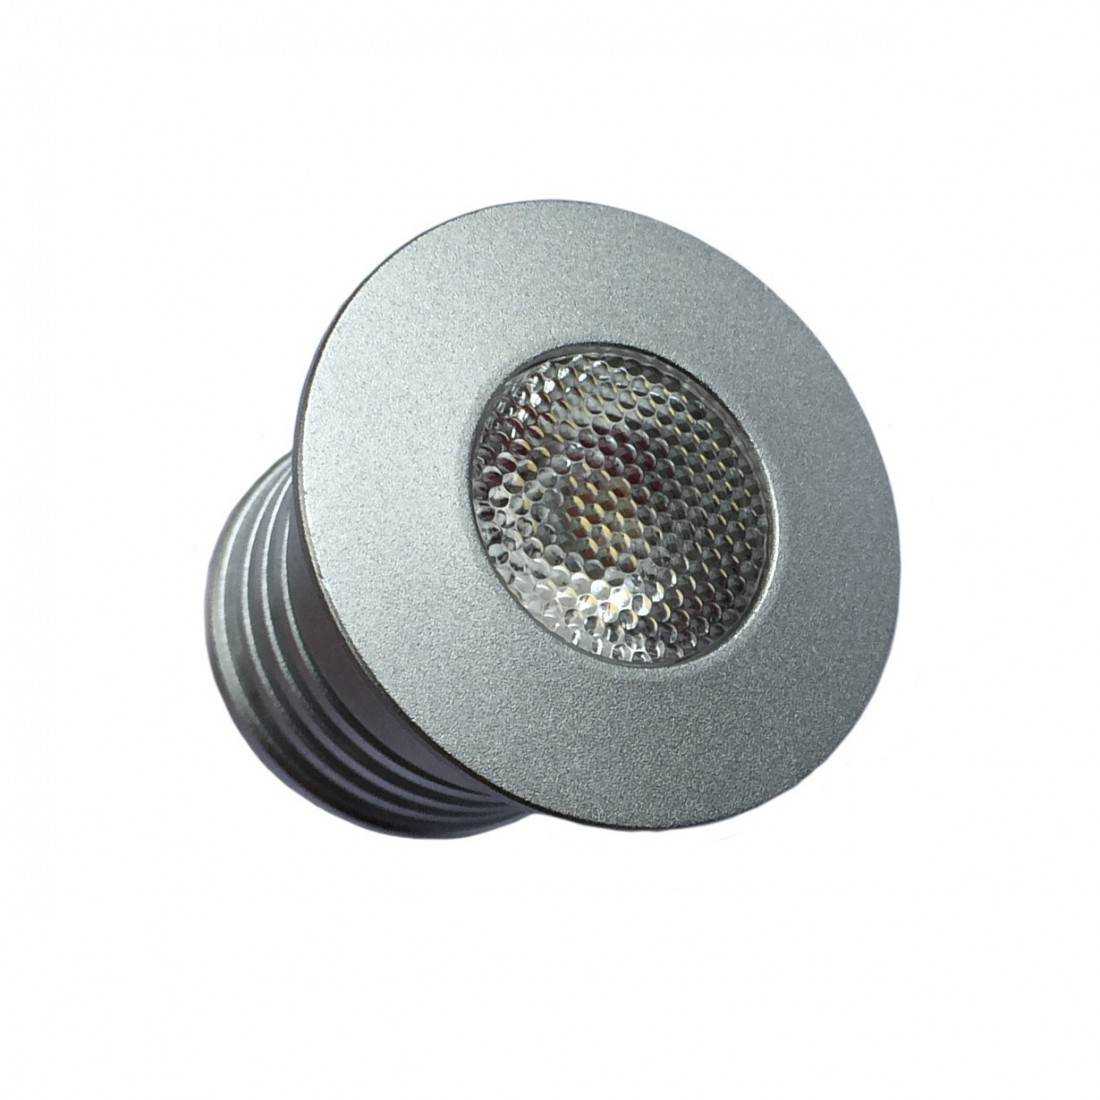 LEDLUX Mini spot LED encastrable dimmable, variateur tactile, 12 V